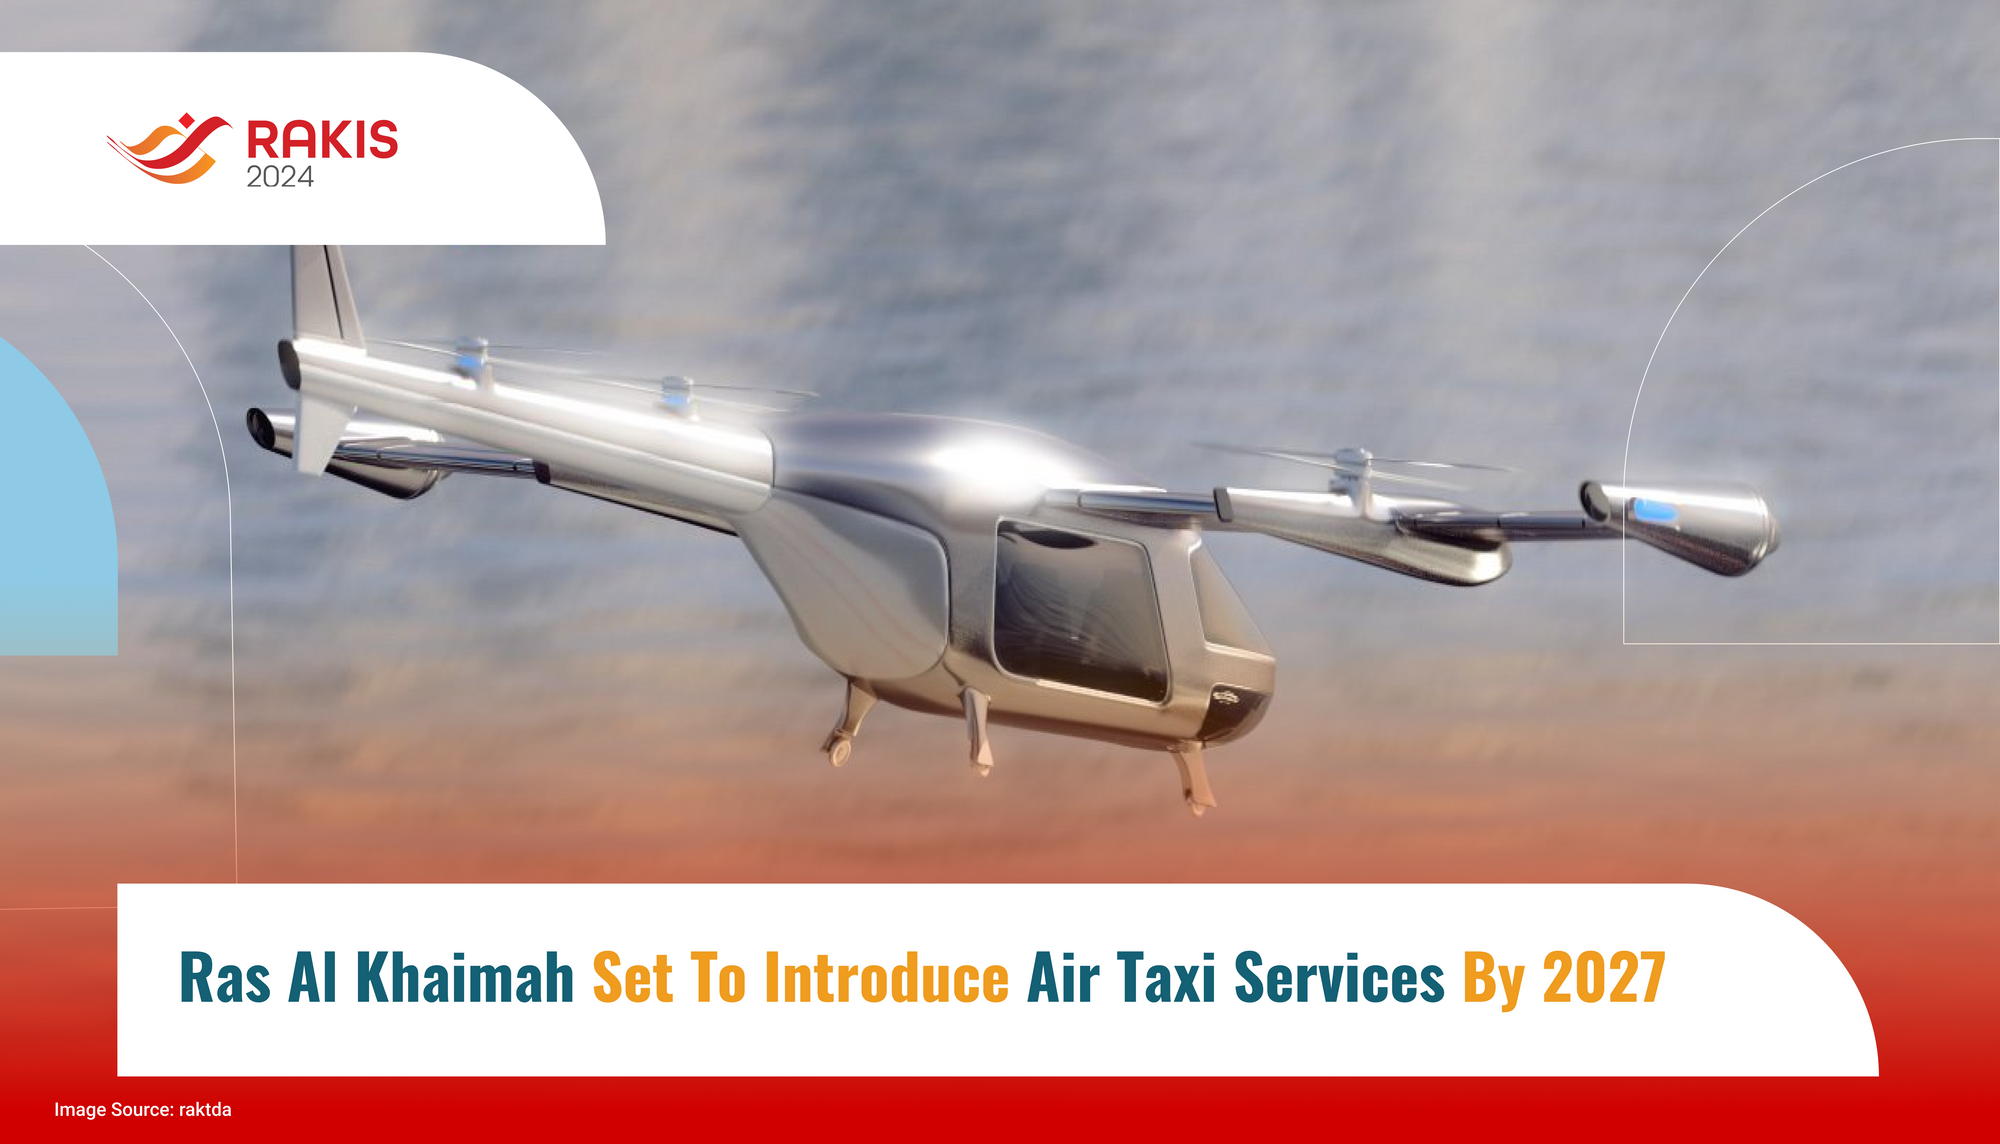 Ras Al Khaimah Set to Introduce Air Taxi Services by 2027